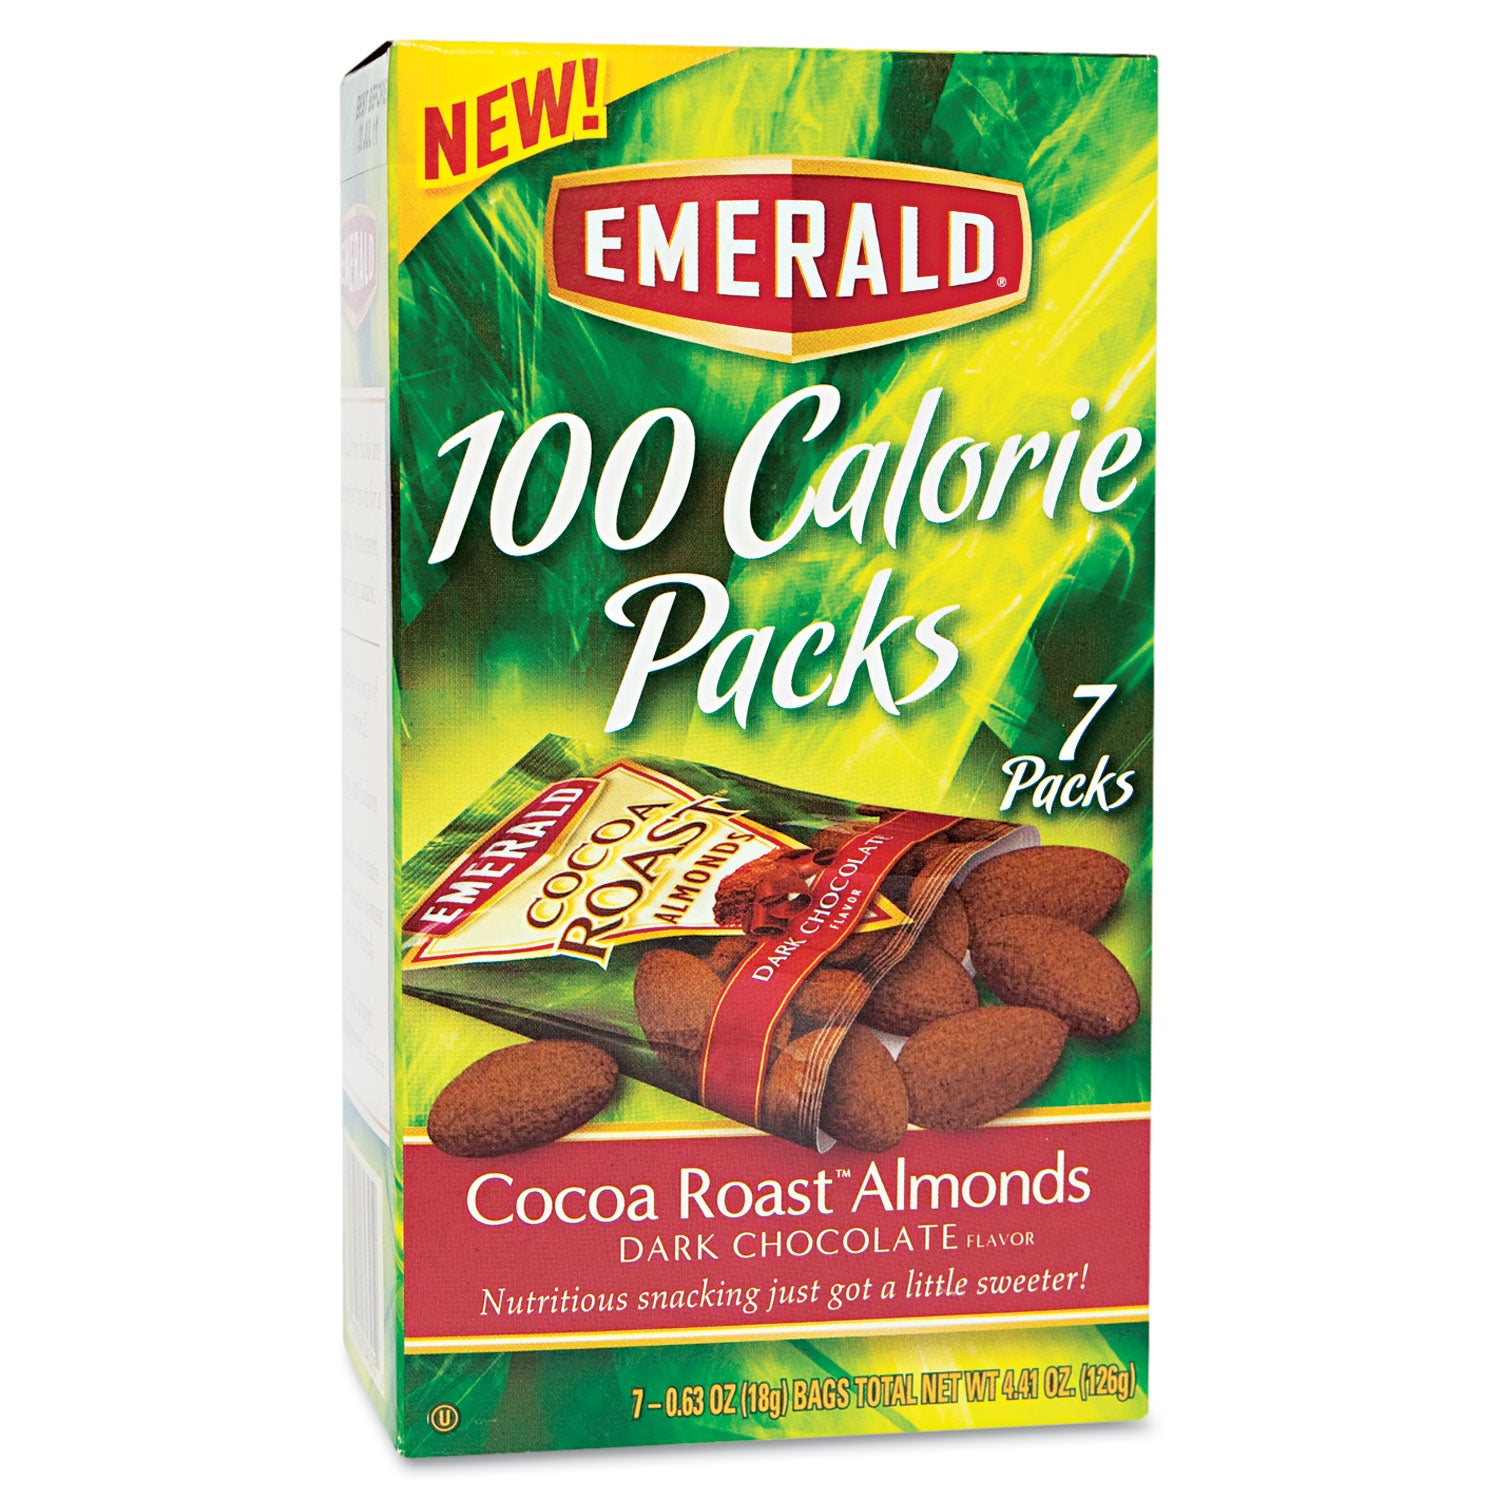 100-calorie-pack-cocoa-roast-almonds-063-oz-packs-7-box_dfd84325 - 1